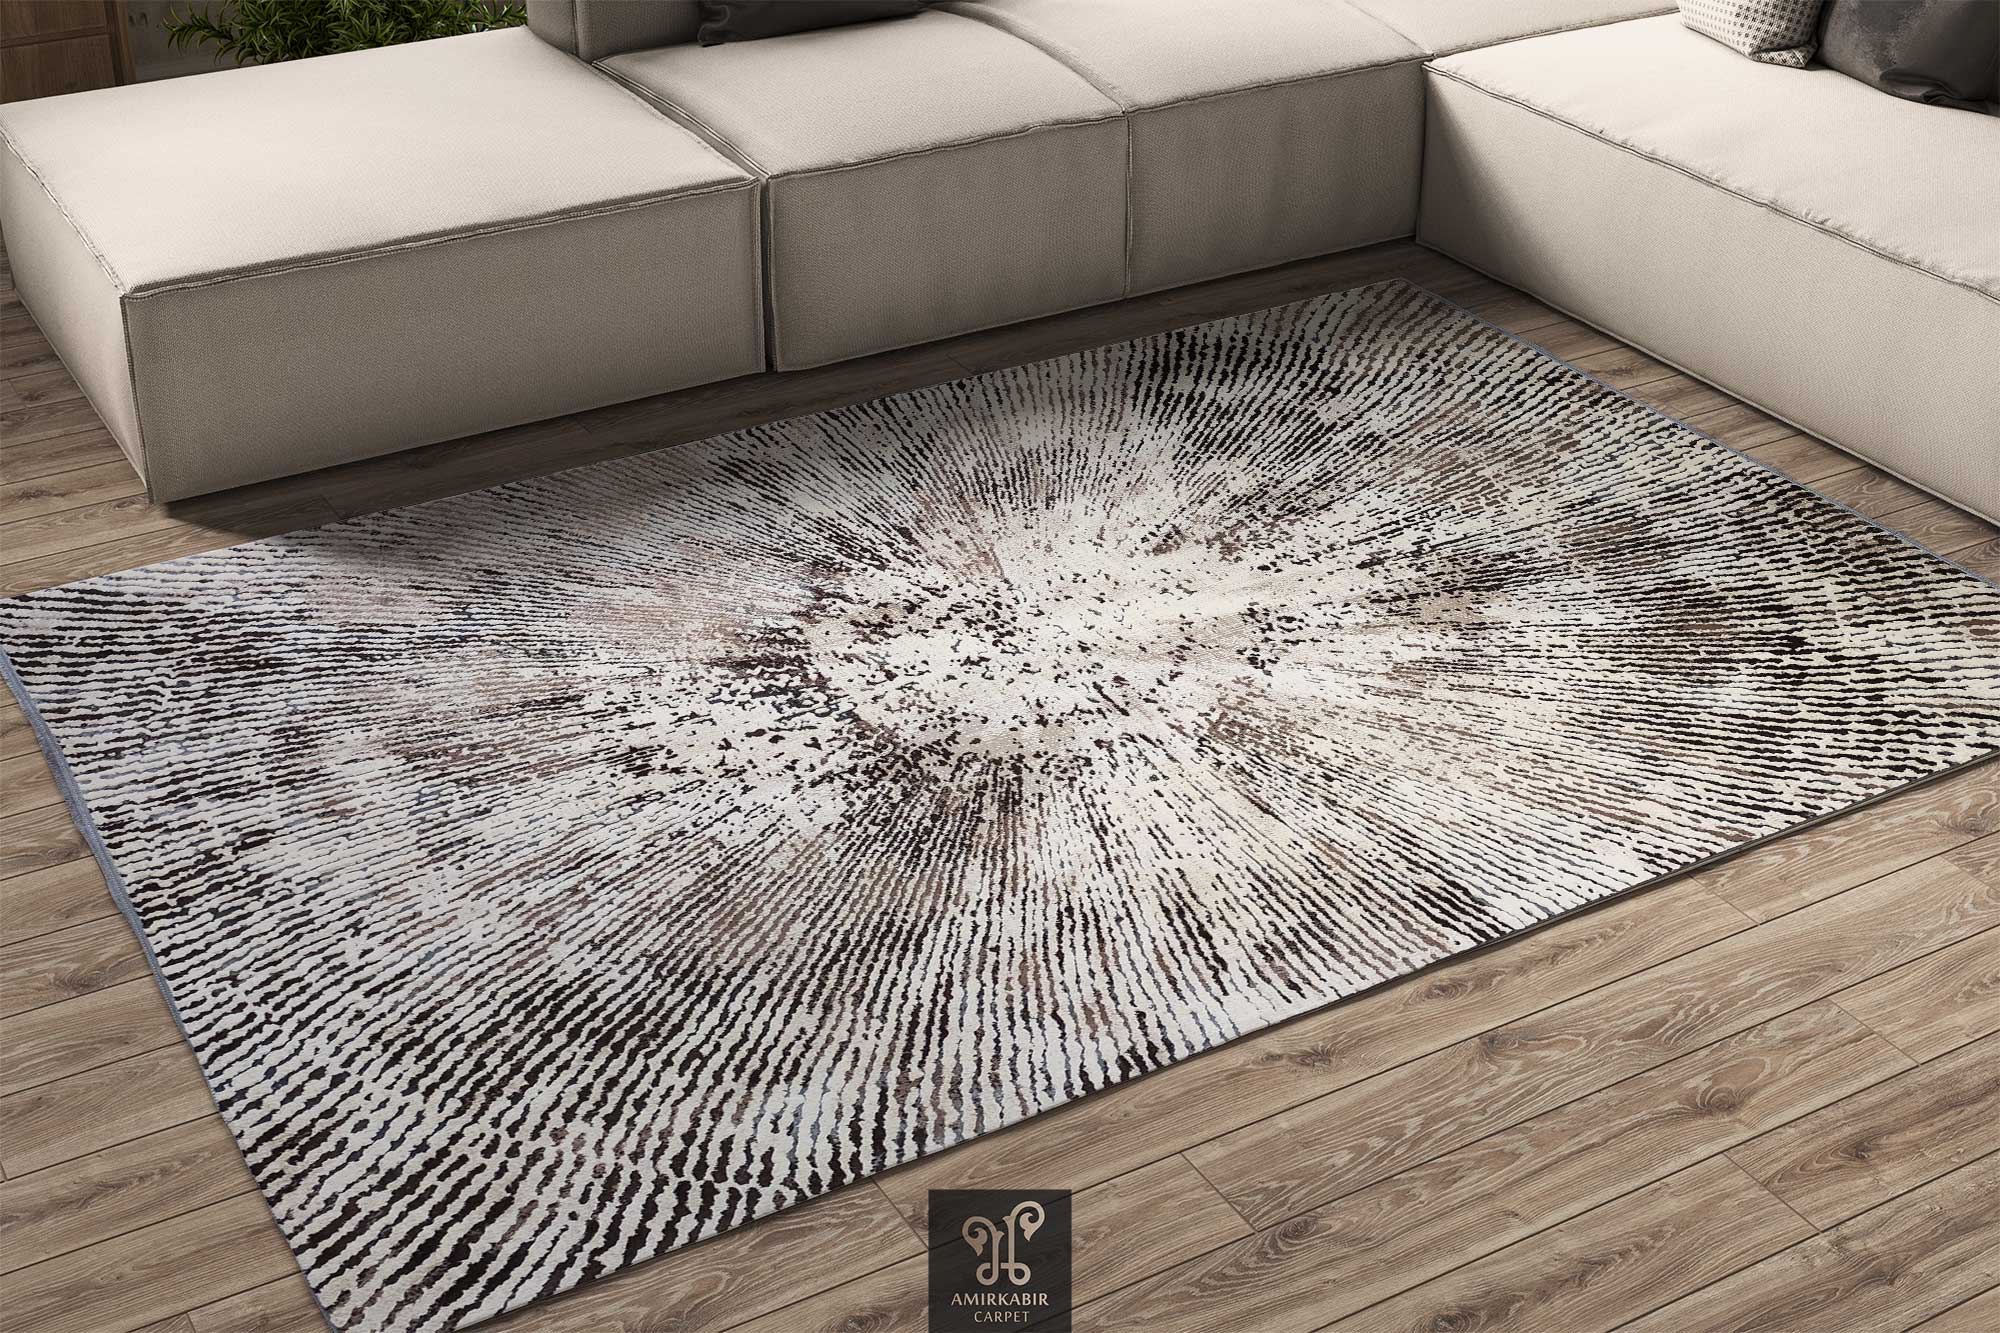 Vintage 400 reeds carpet -1400 Density RUG - Modern Carpet - Harmony Carpet 11107